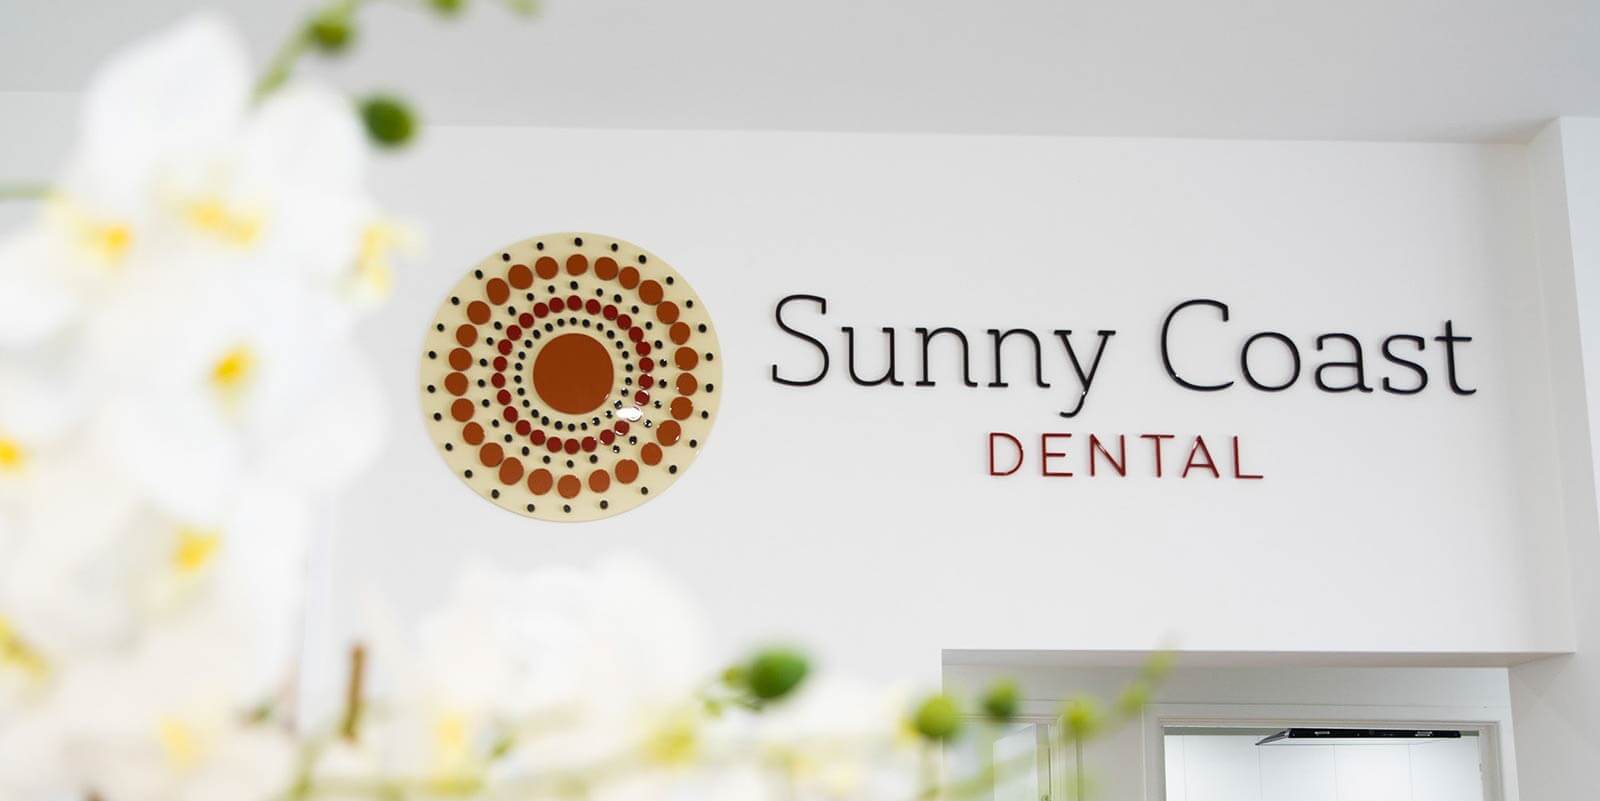 Sunny Coast Dental sign